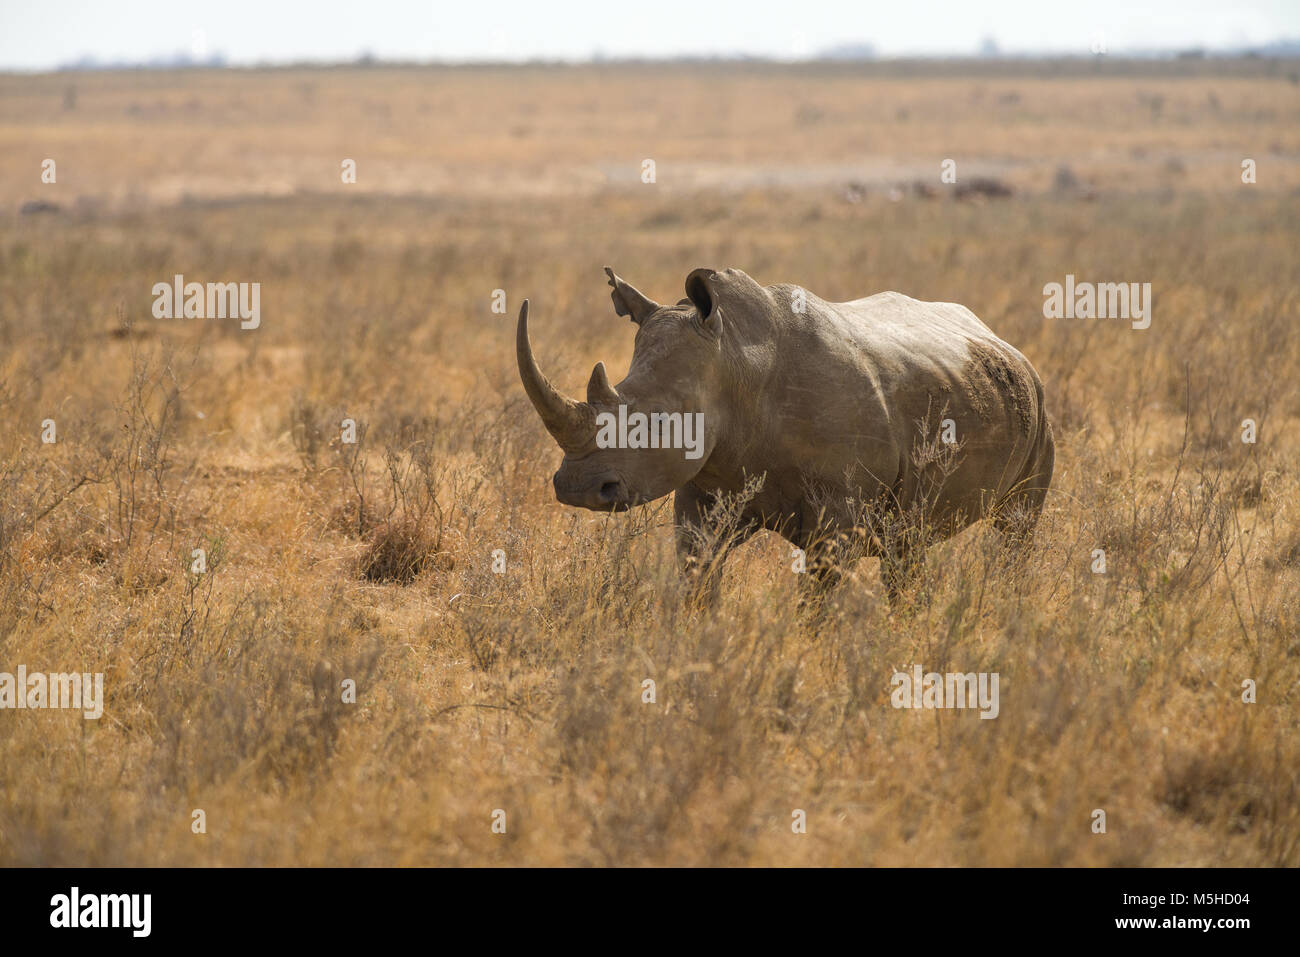 A white rhinoceros or square-lipped rhinoceros (Ceratotherium simum) in tall dry grass, Nairobi National Park, Kenya Stock Photo